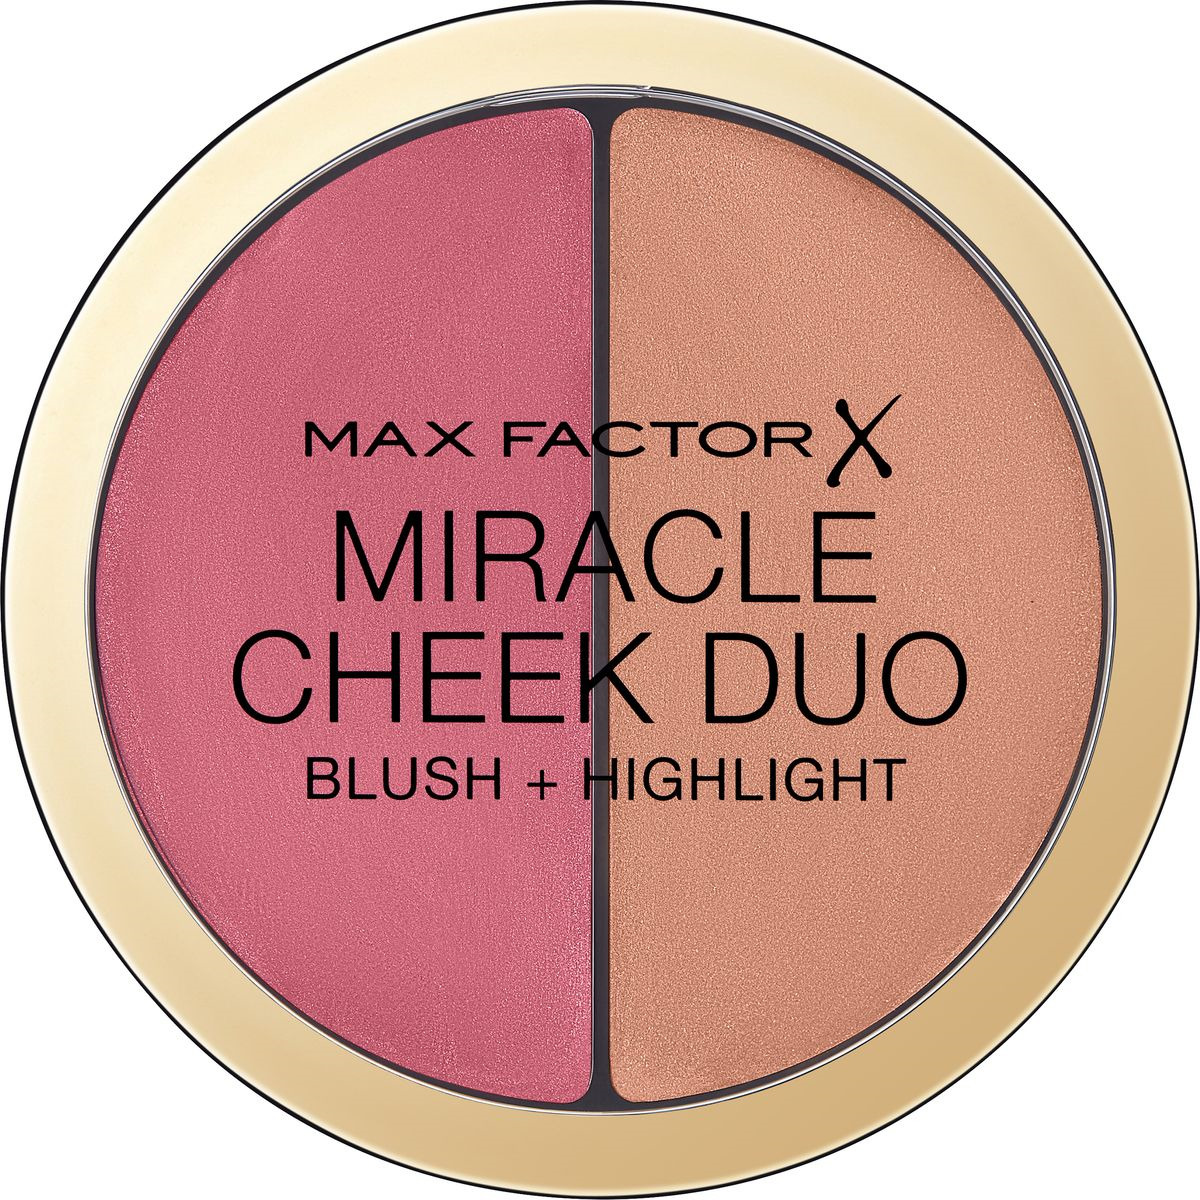 Палетка для контуринга Max Factor Miracle Cheek Duo, тон 30 dusky pink & copper